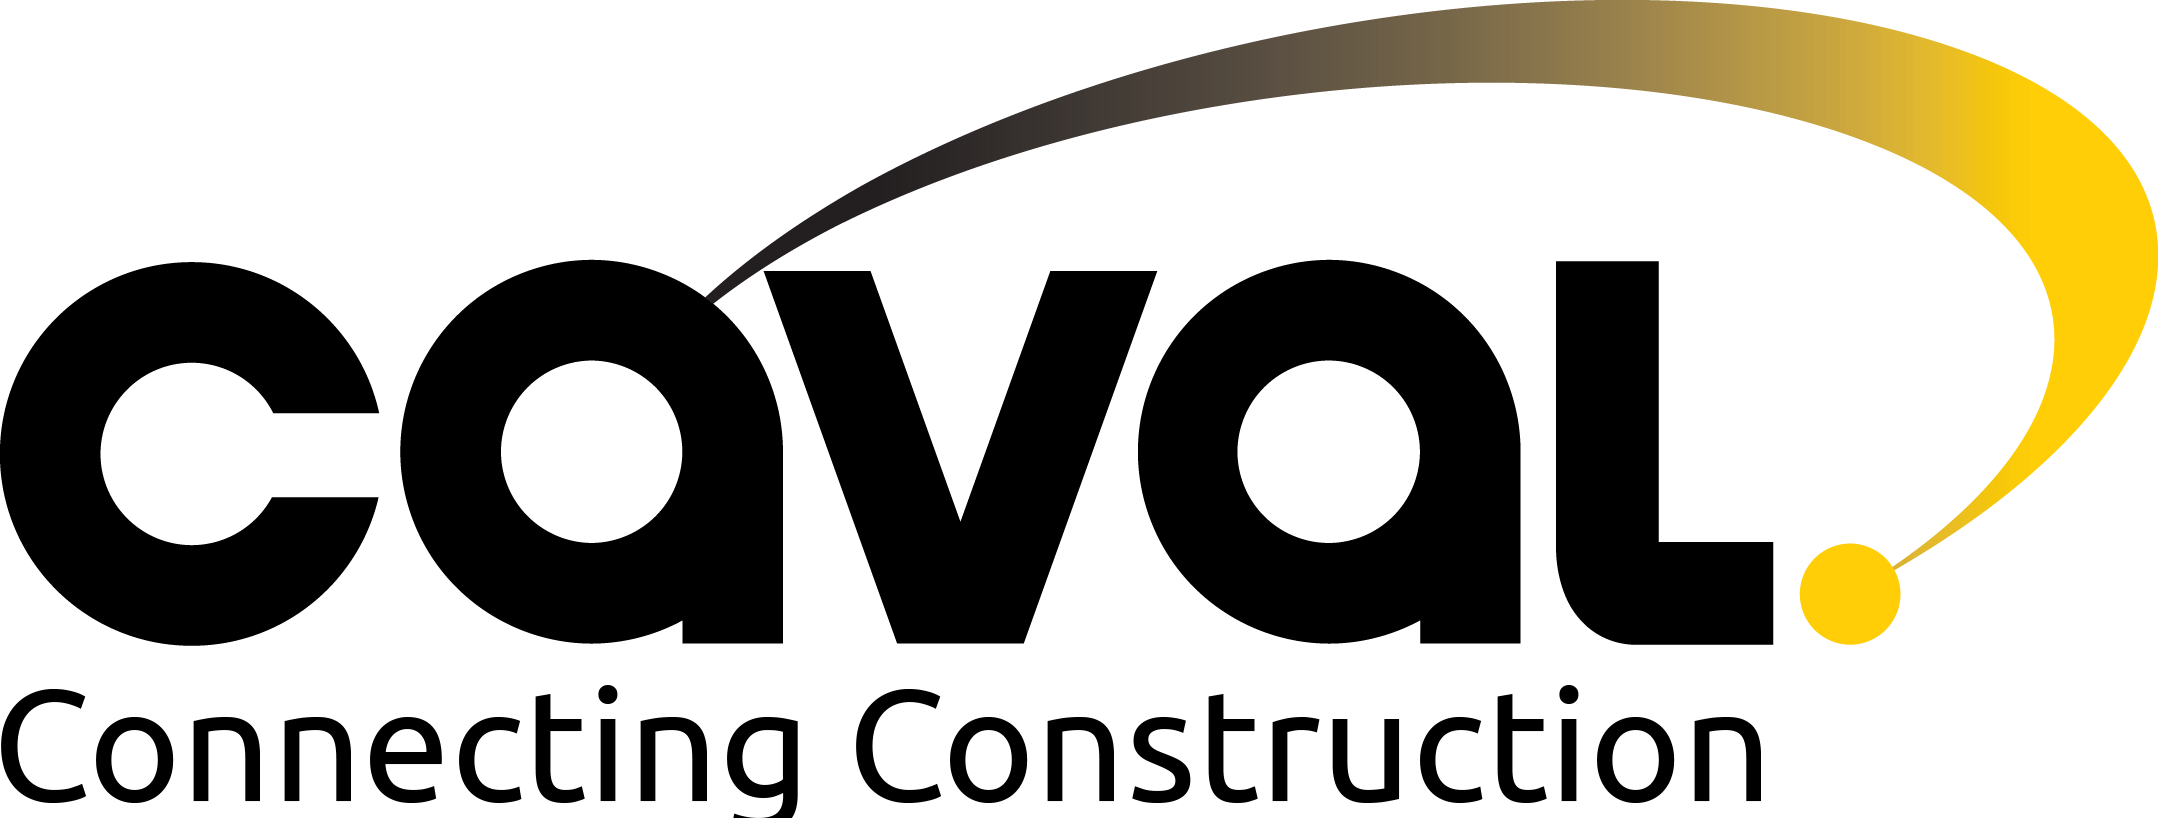 Caval Limited Logo